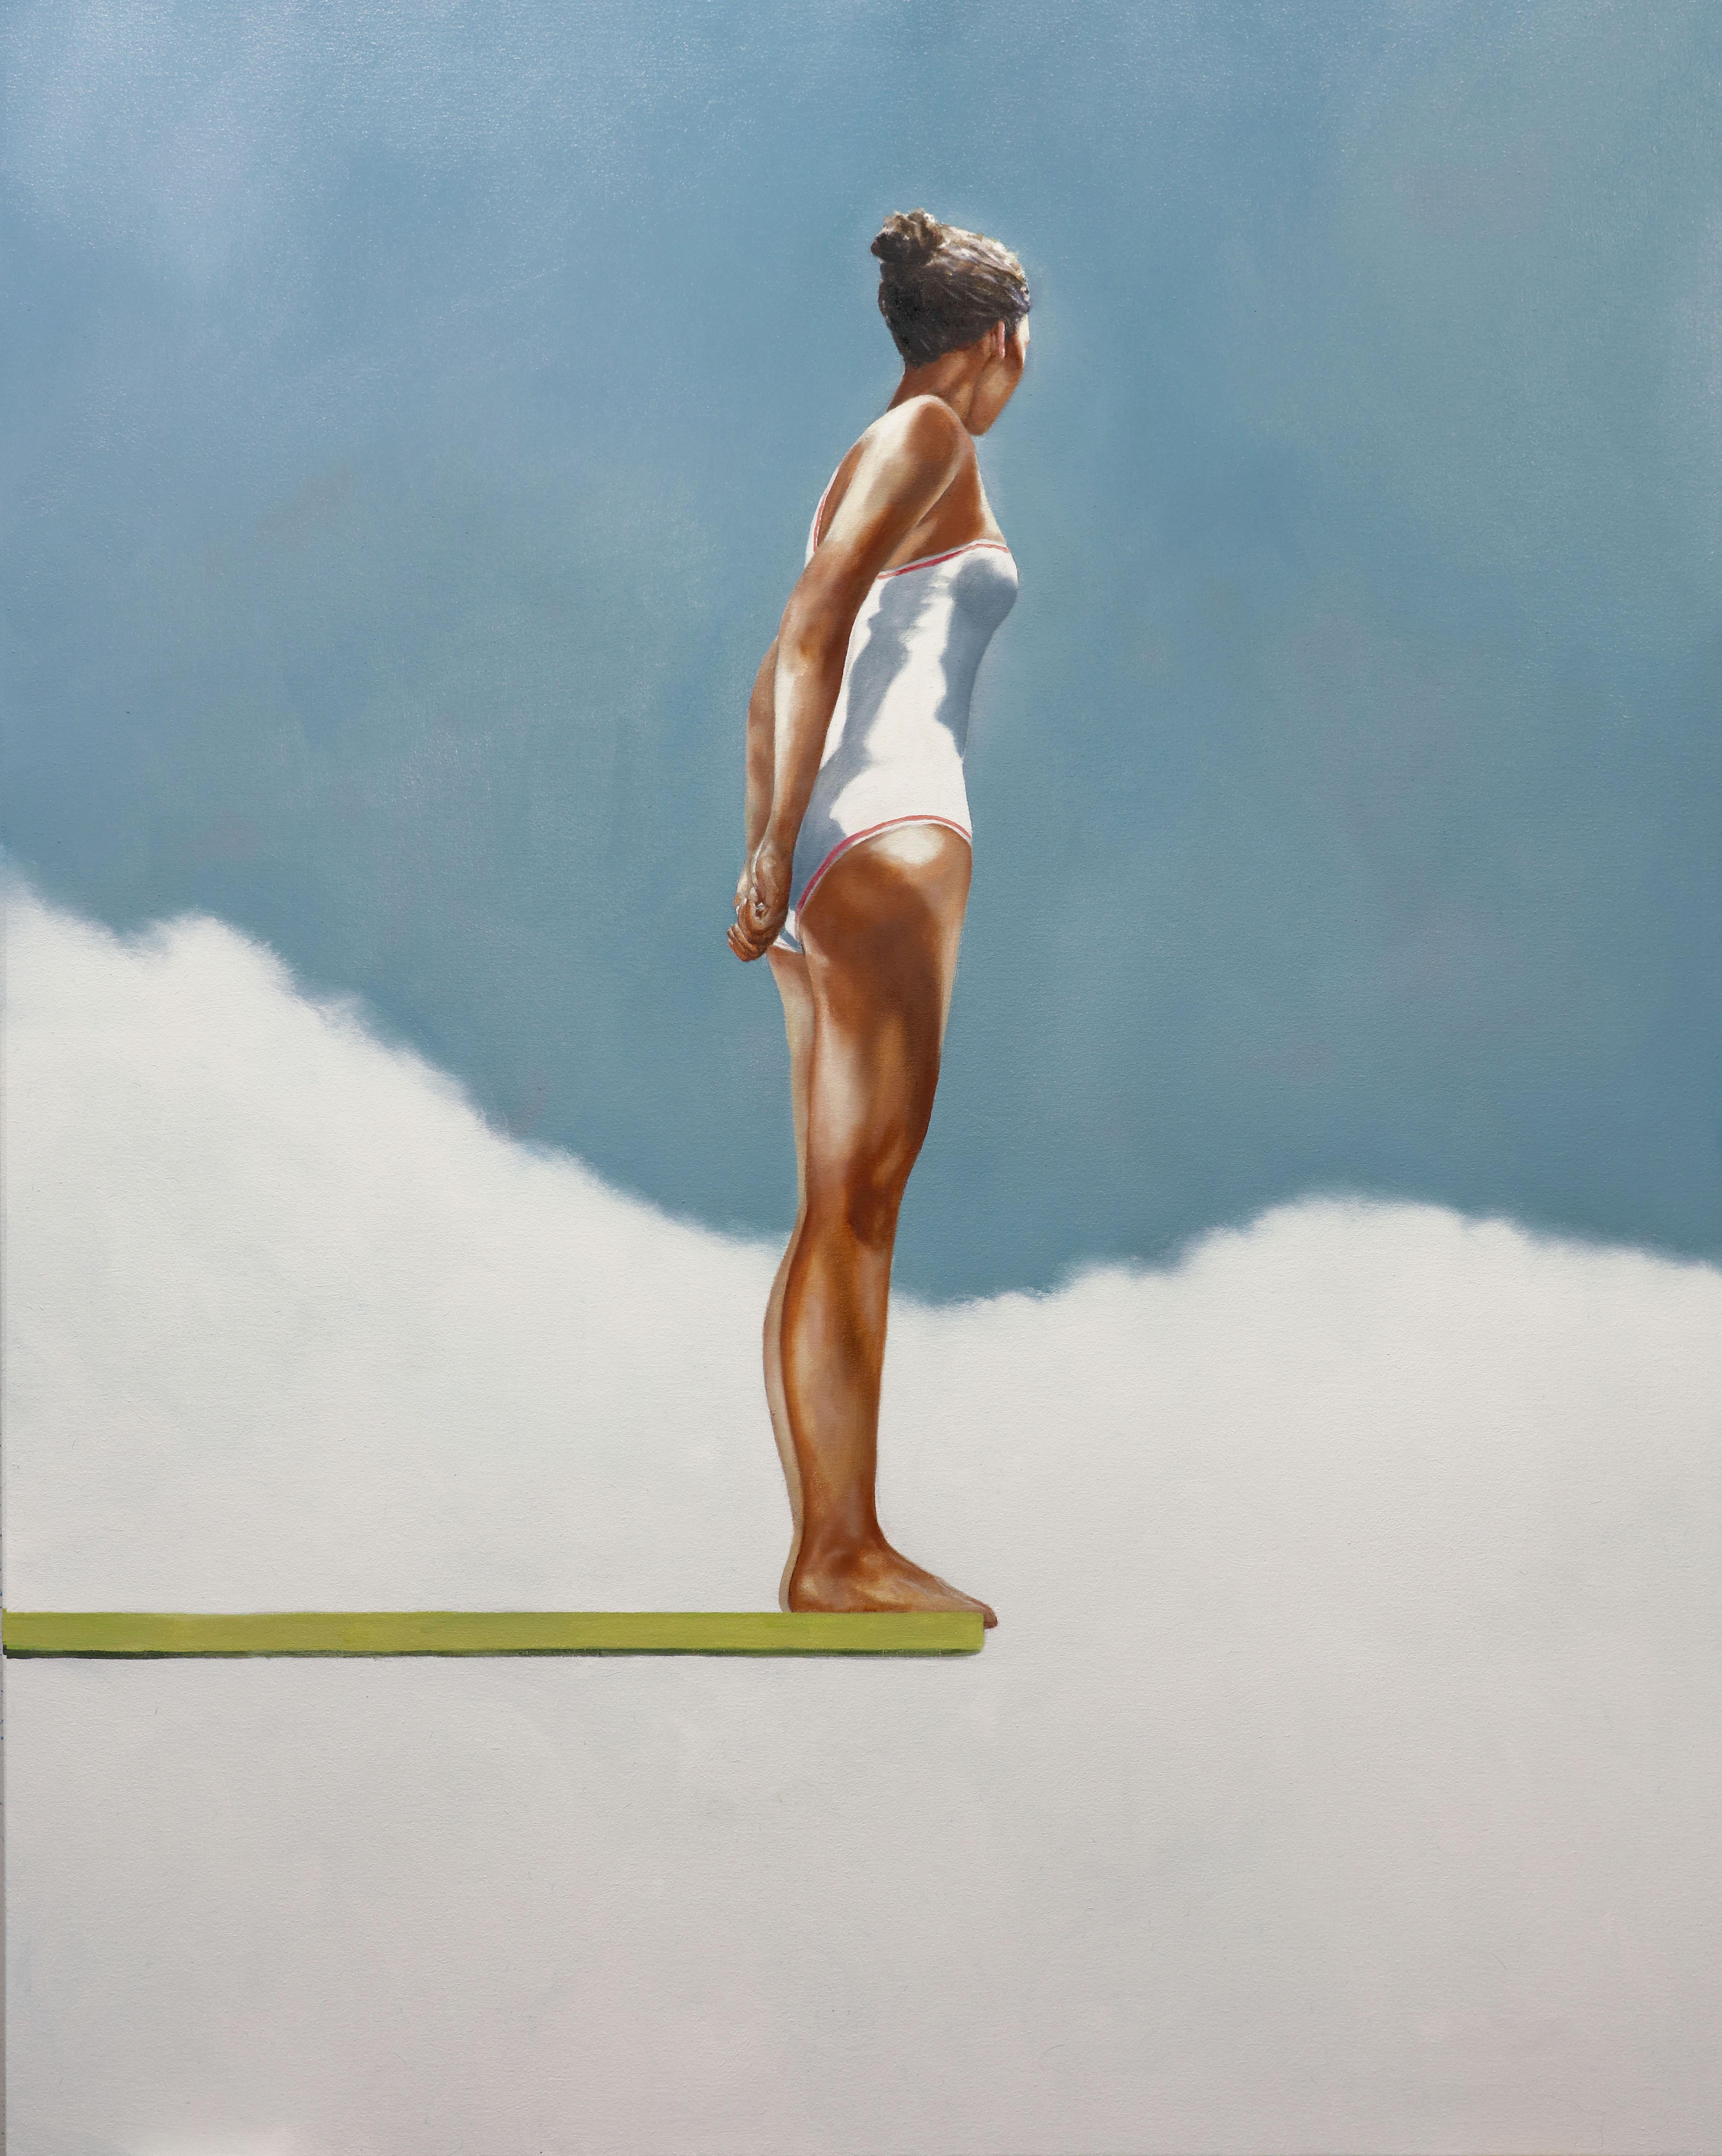 Eric Zener Figurative Painting - GRACE - Figurative Realism / Female Swimmer / Beach House / Contemporary